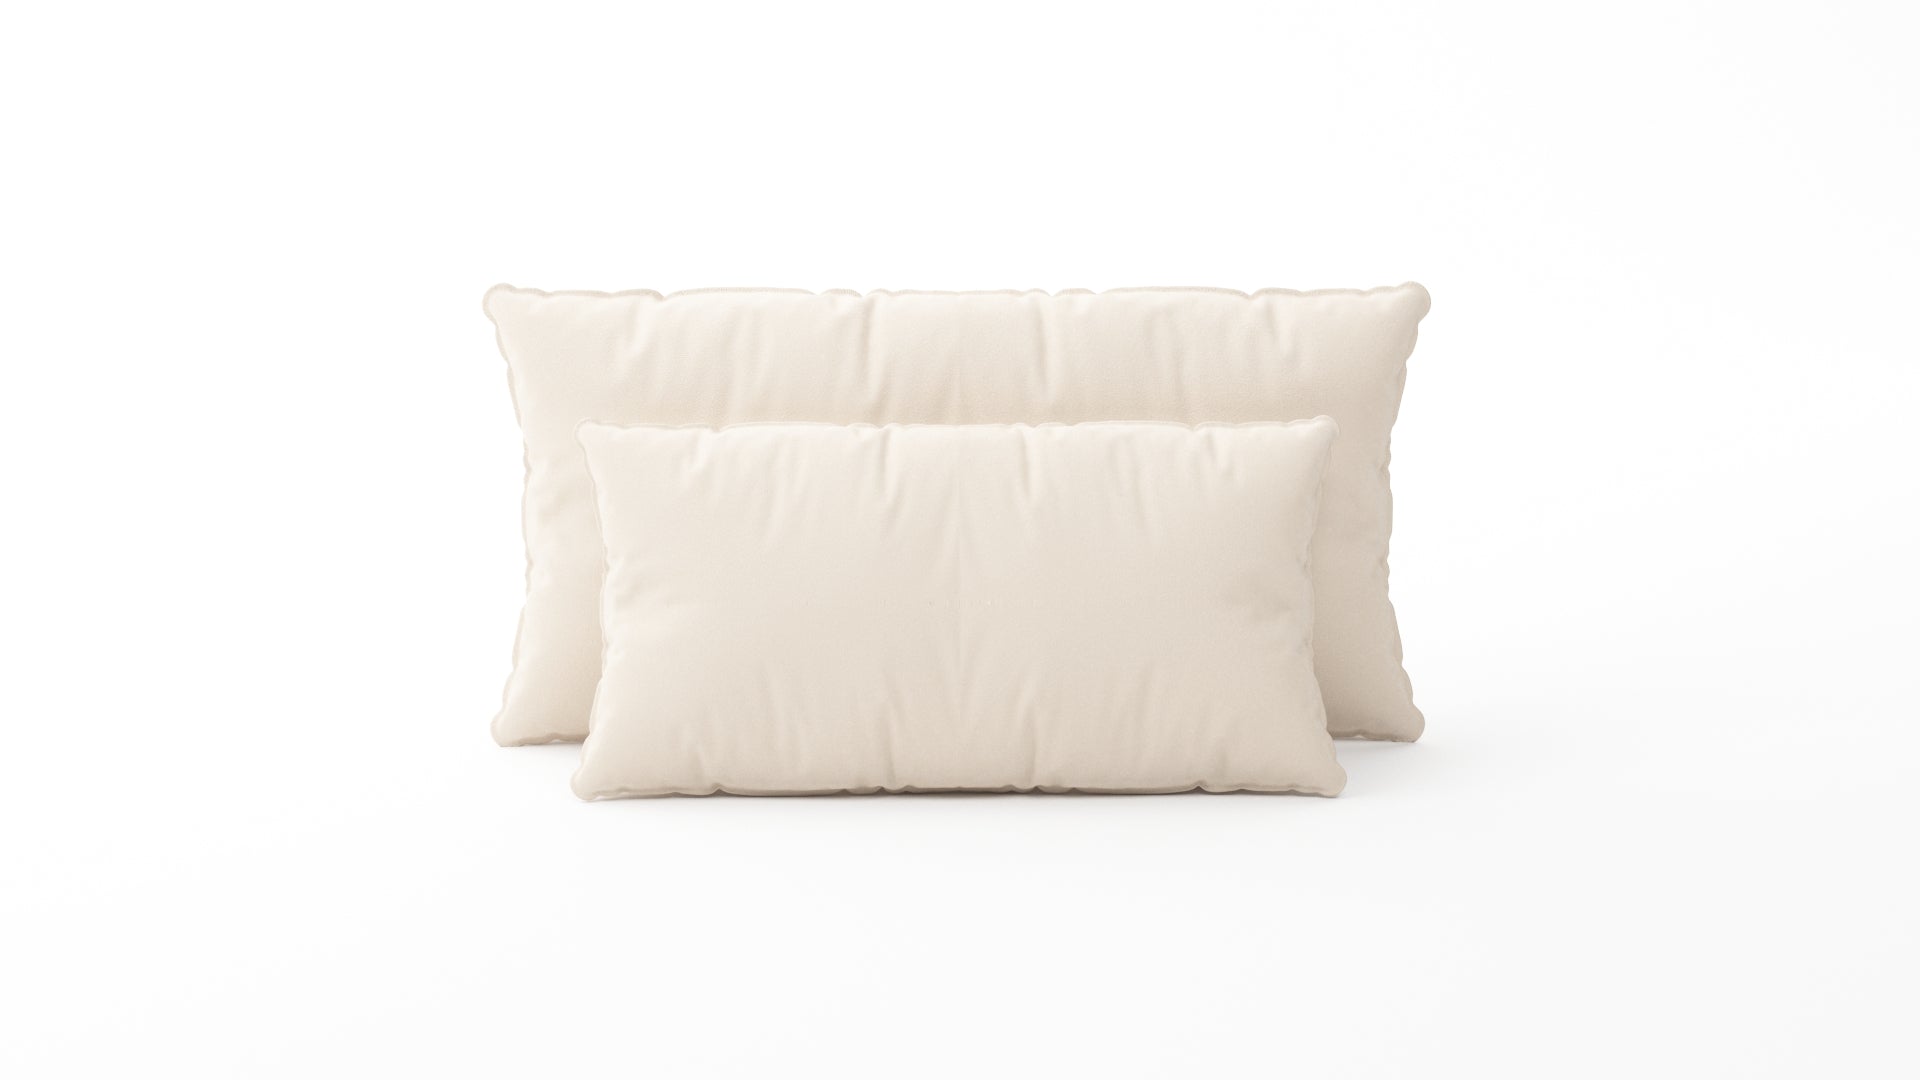 Certified Organic Spiraled™ Cotton Pillow - Organic Mattresses, Inc. - Sleep Organic!®